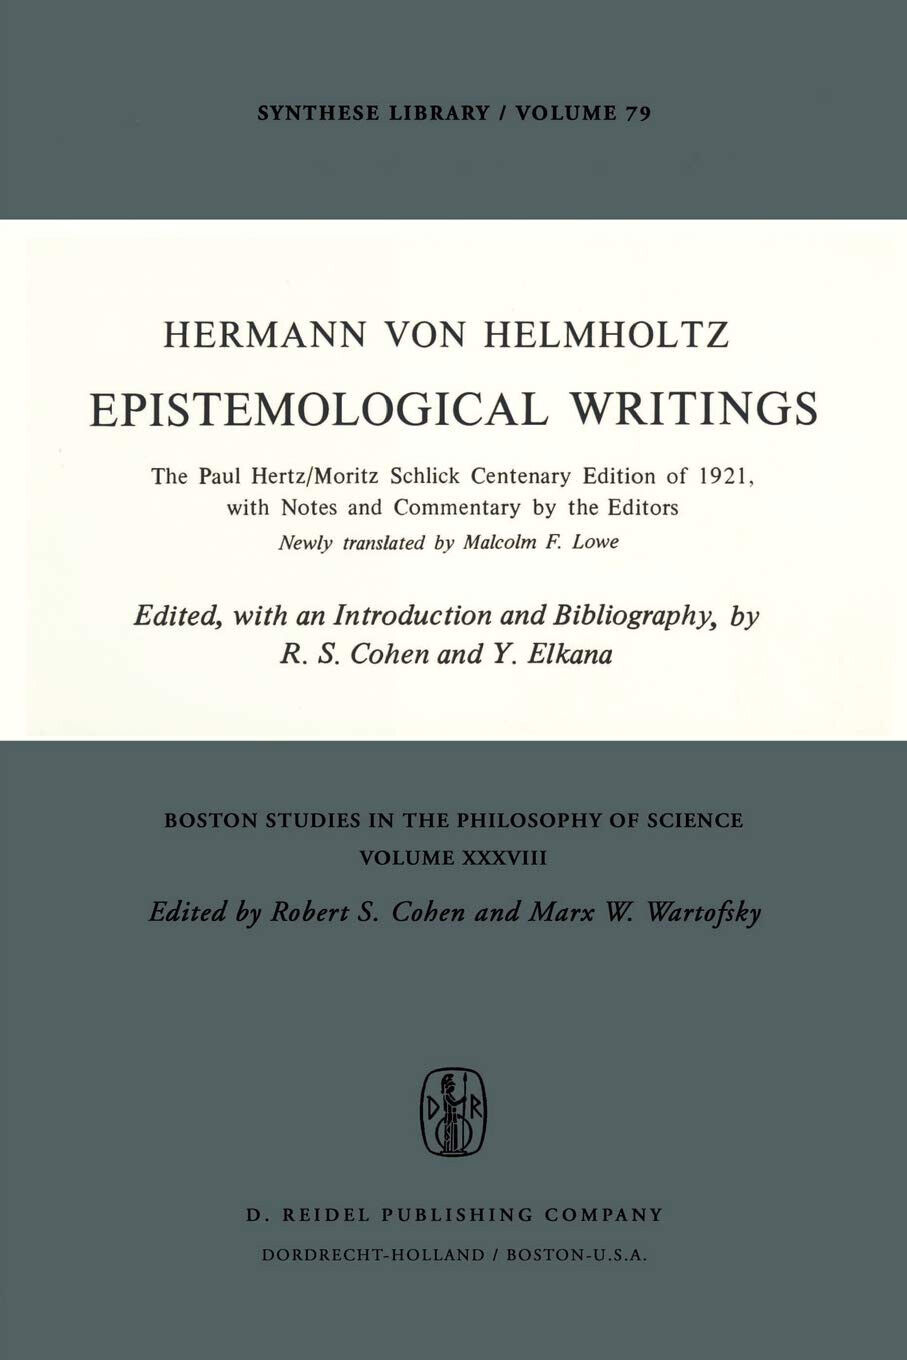 Epistemological Writings - H. Von Helmholtz - Springer, 1977